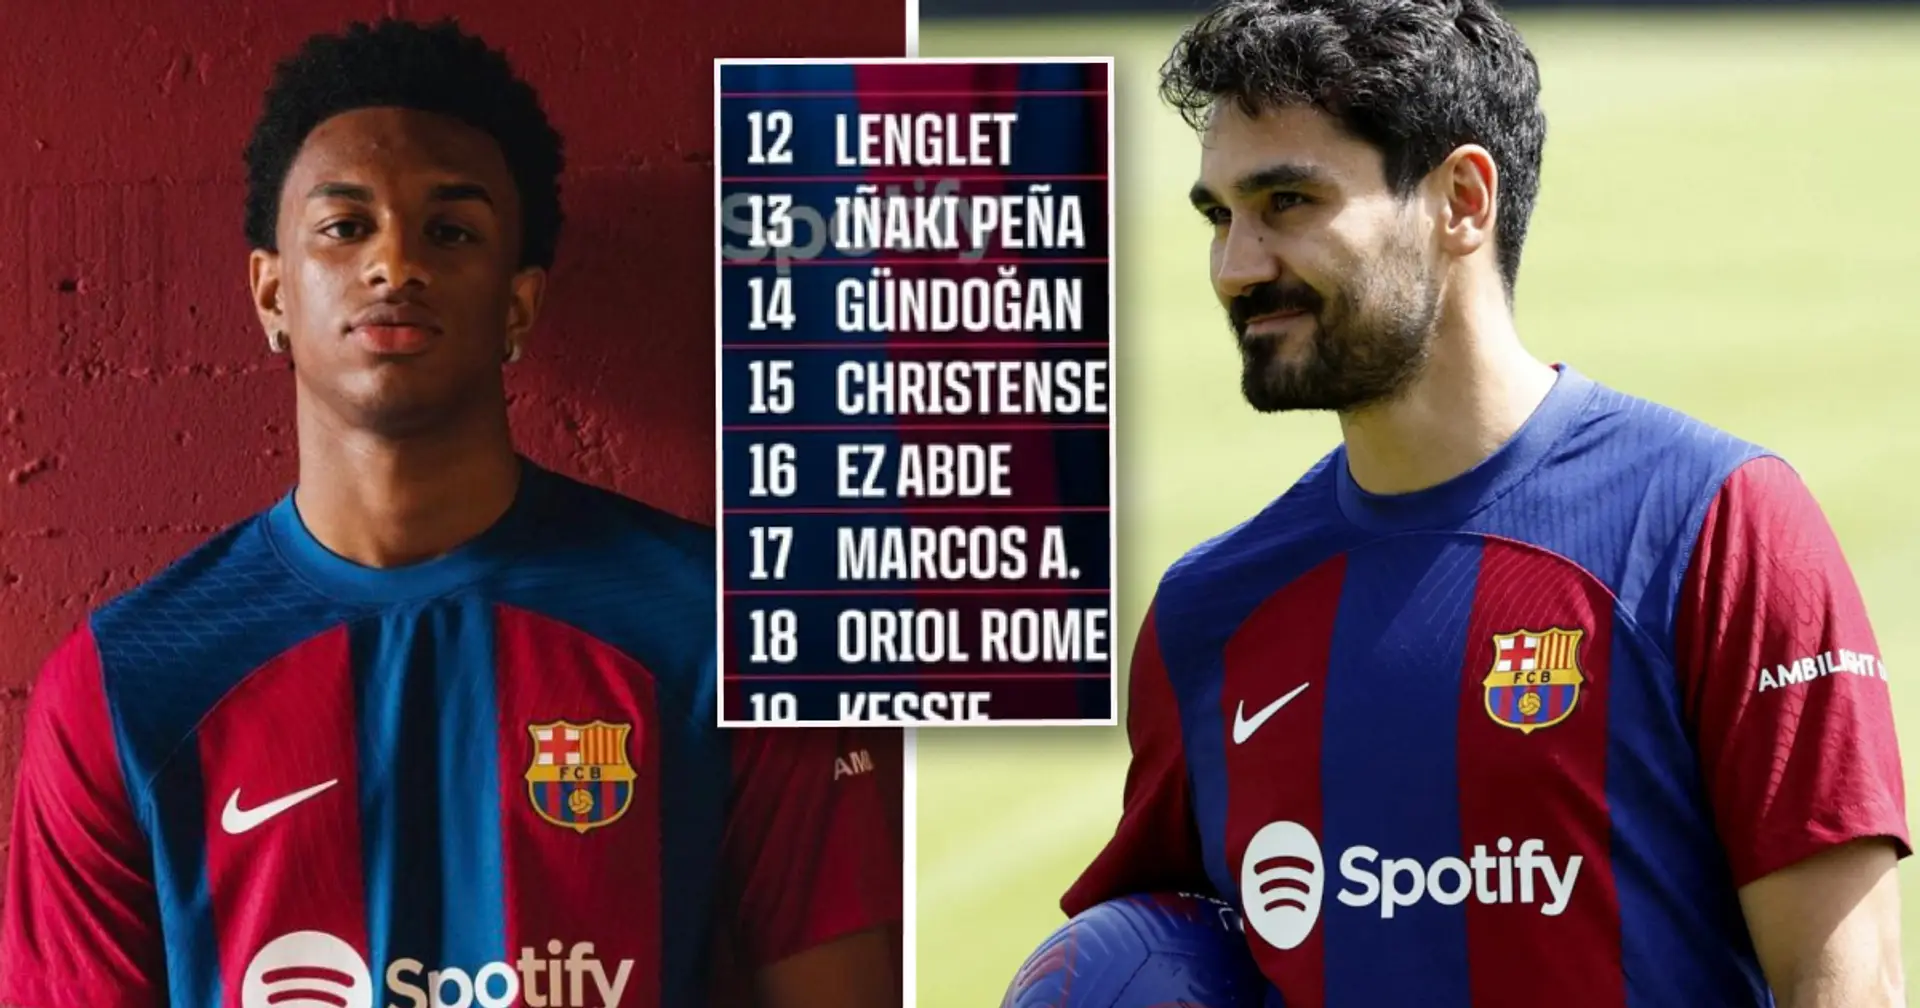 Gundogan 14, Balde 3: Barcelona confirm squad number for pre-season